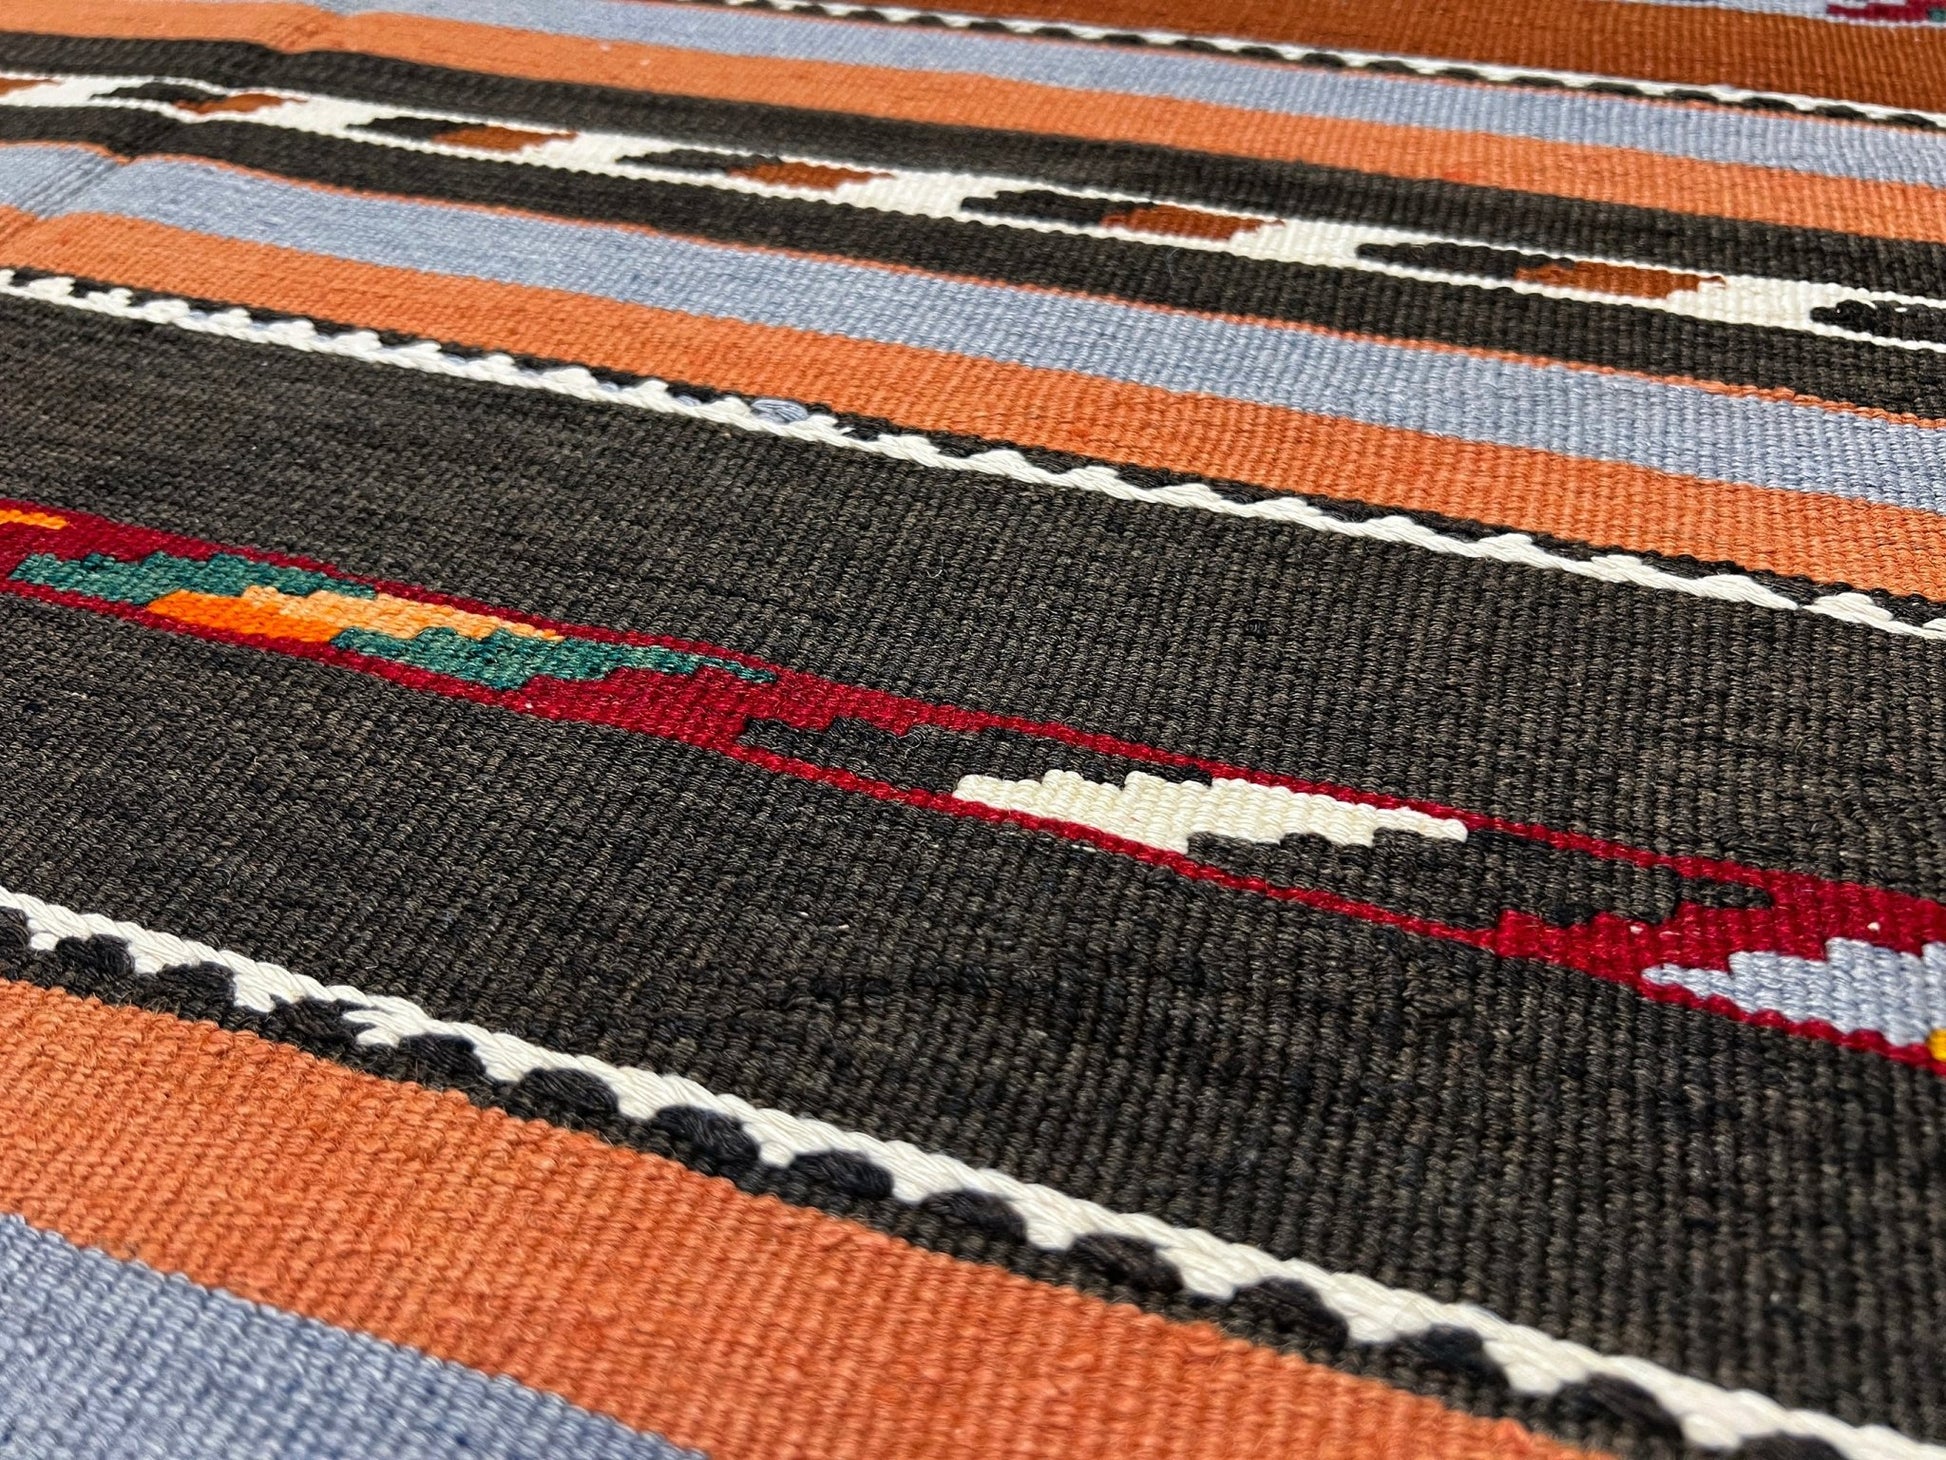 Caucasian minimalist kilim rug shop san francisco bay area. Buy online Handmade wool rug for dining, nursery, bedroom, living room.